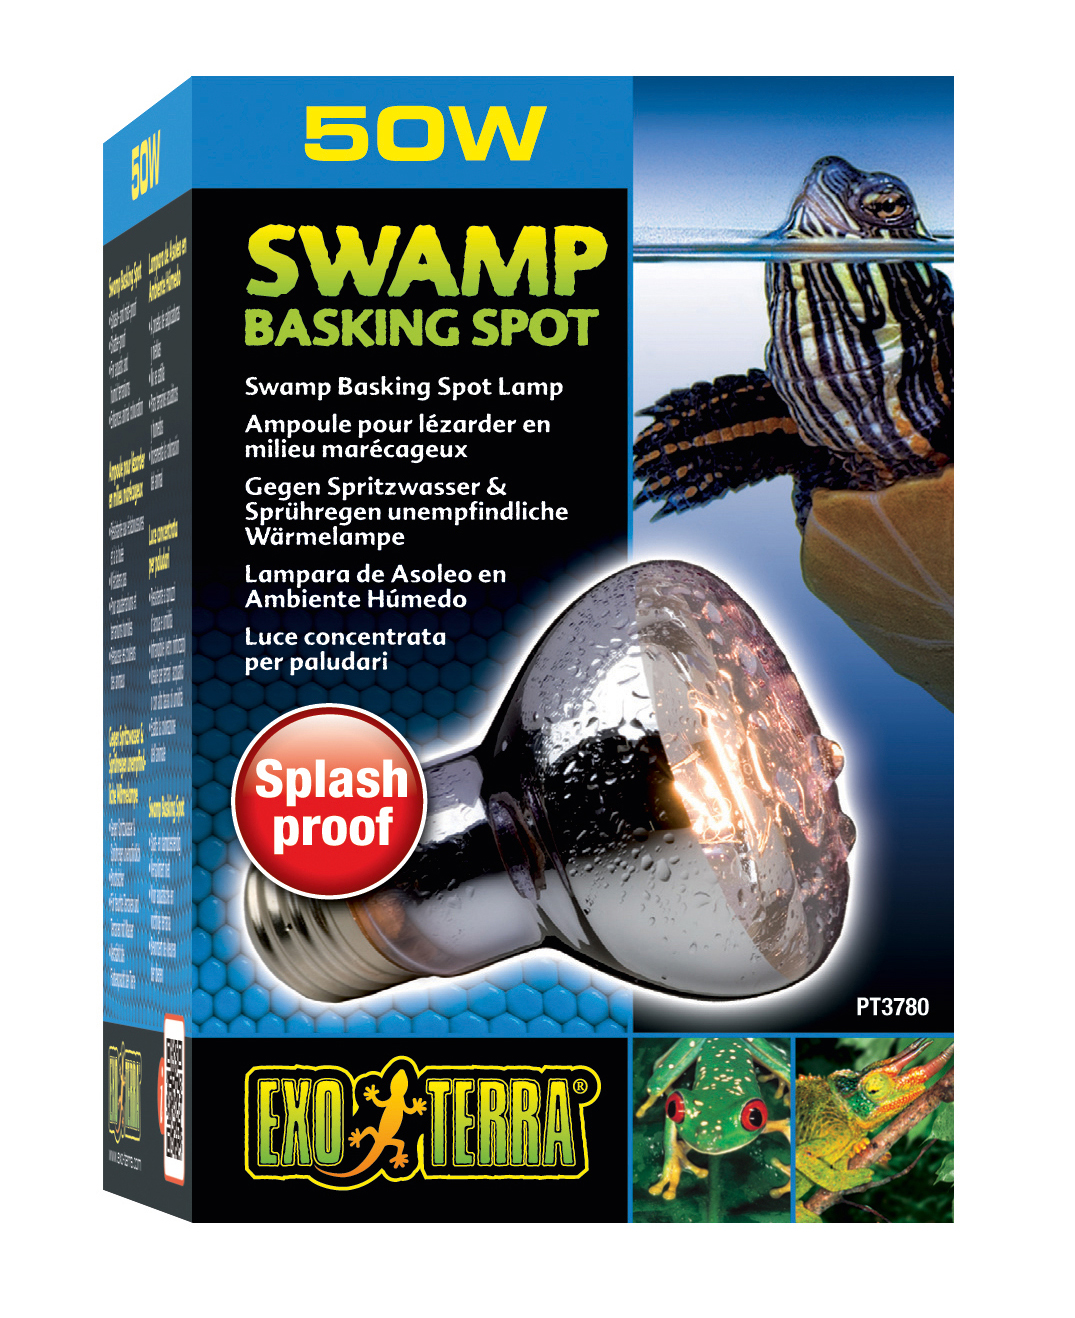 Ex swamp basking spot bulb - <Product shot>